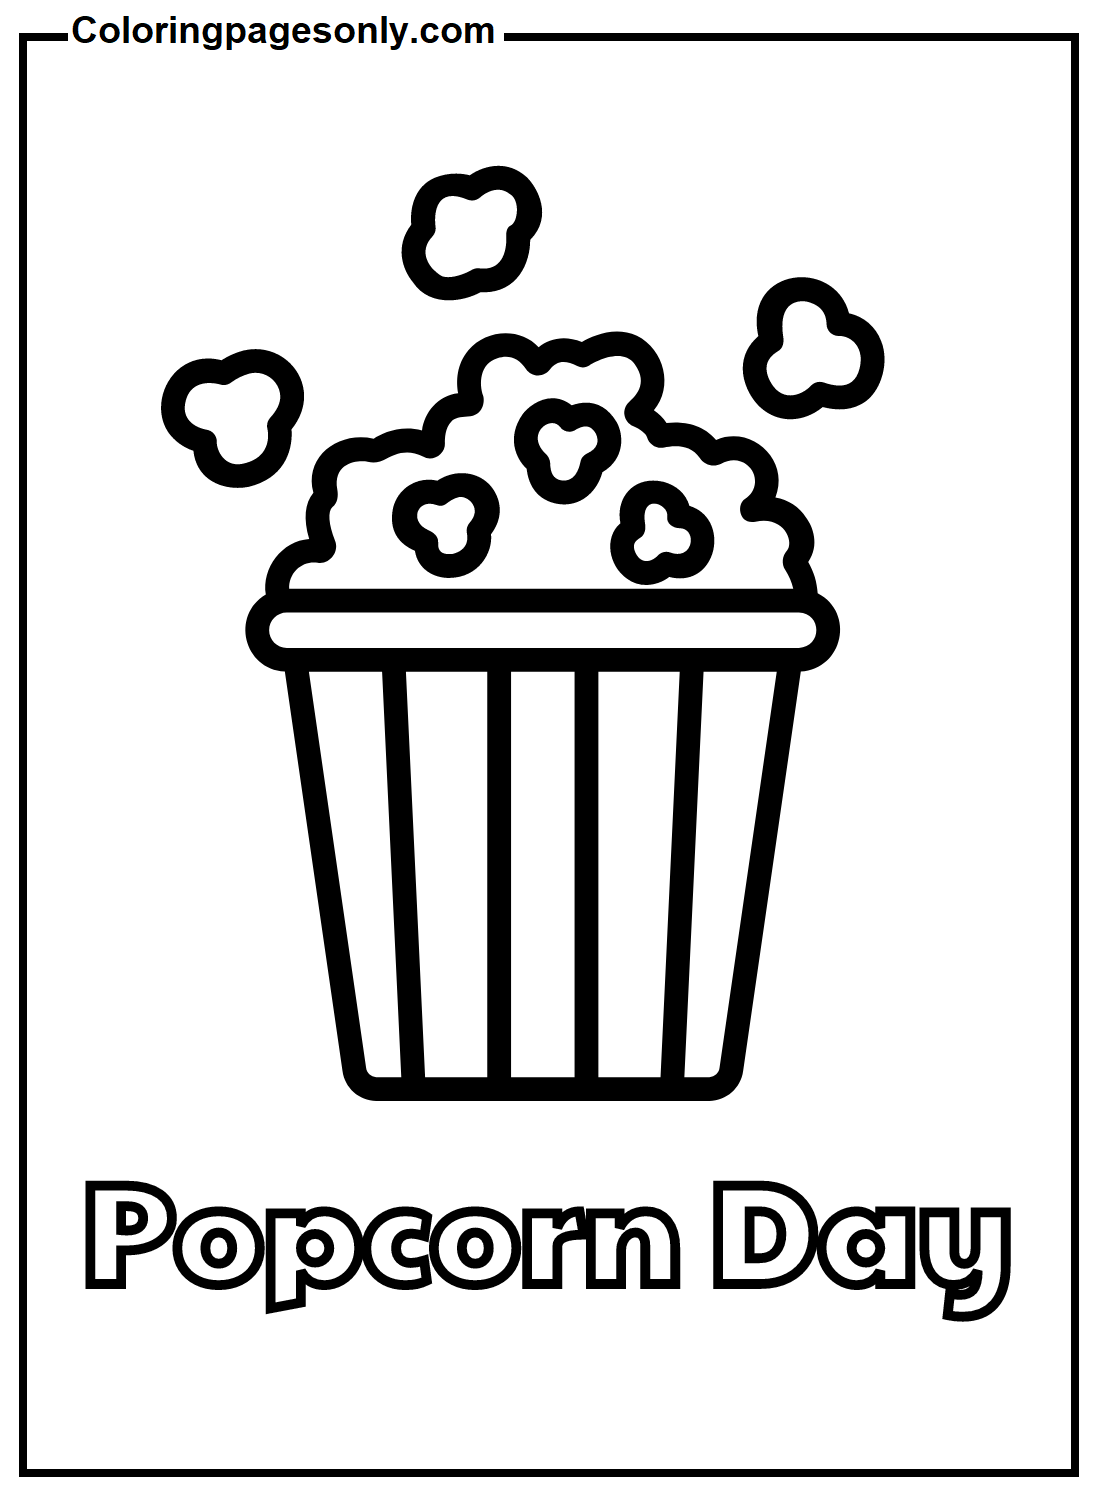 Popcorn Day da Popcorn